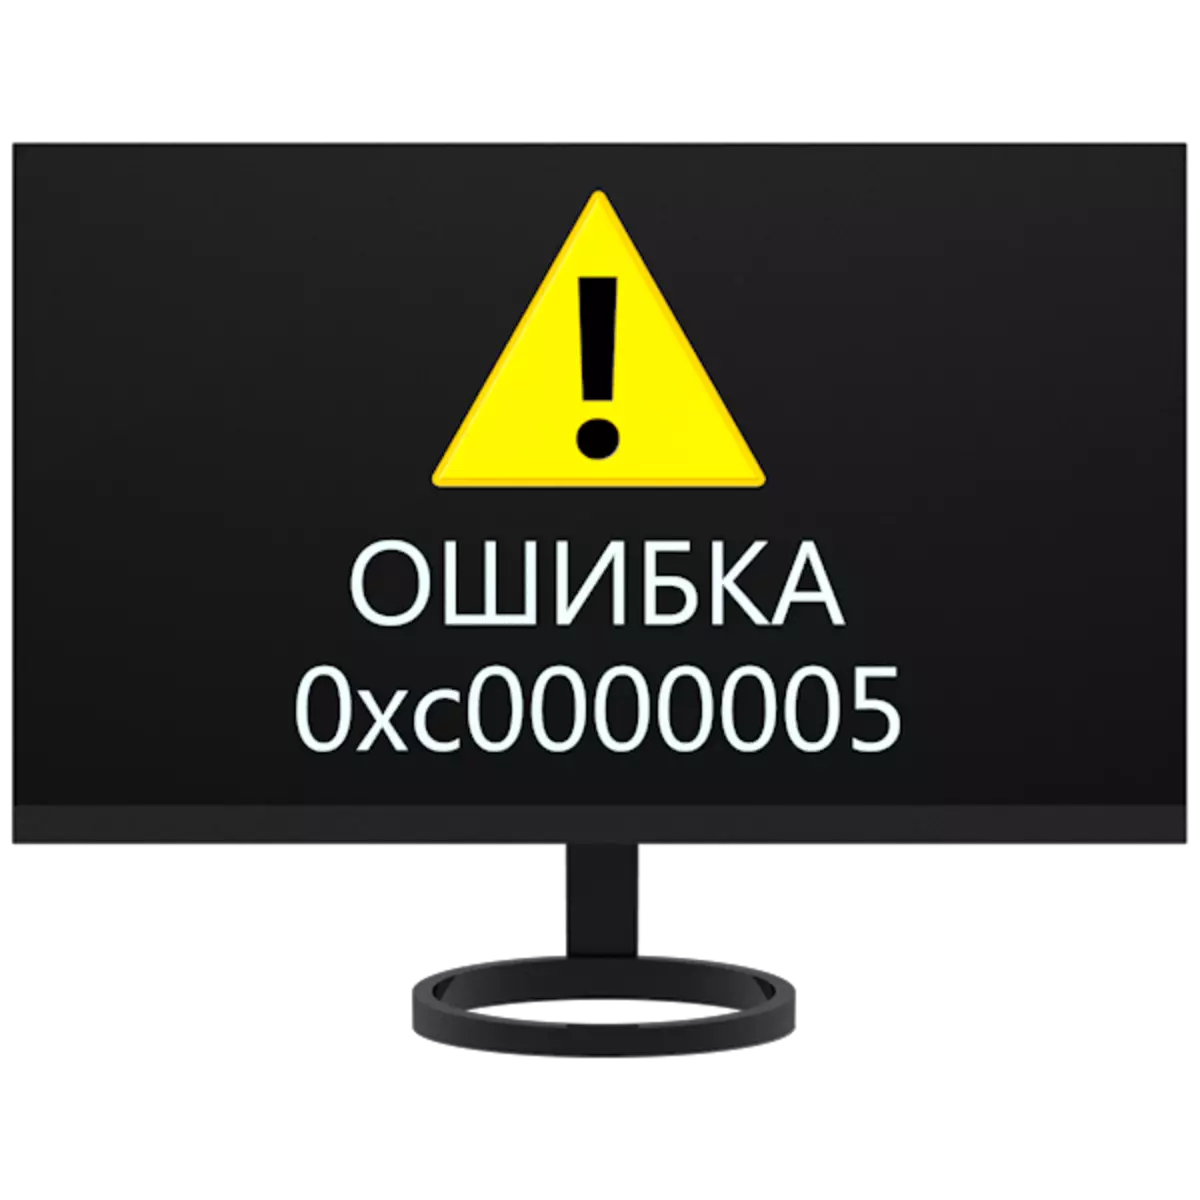 Fehlerkorrektur 0xc0000005 in Windows 7